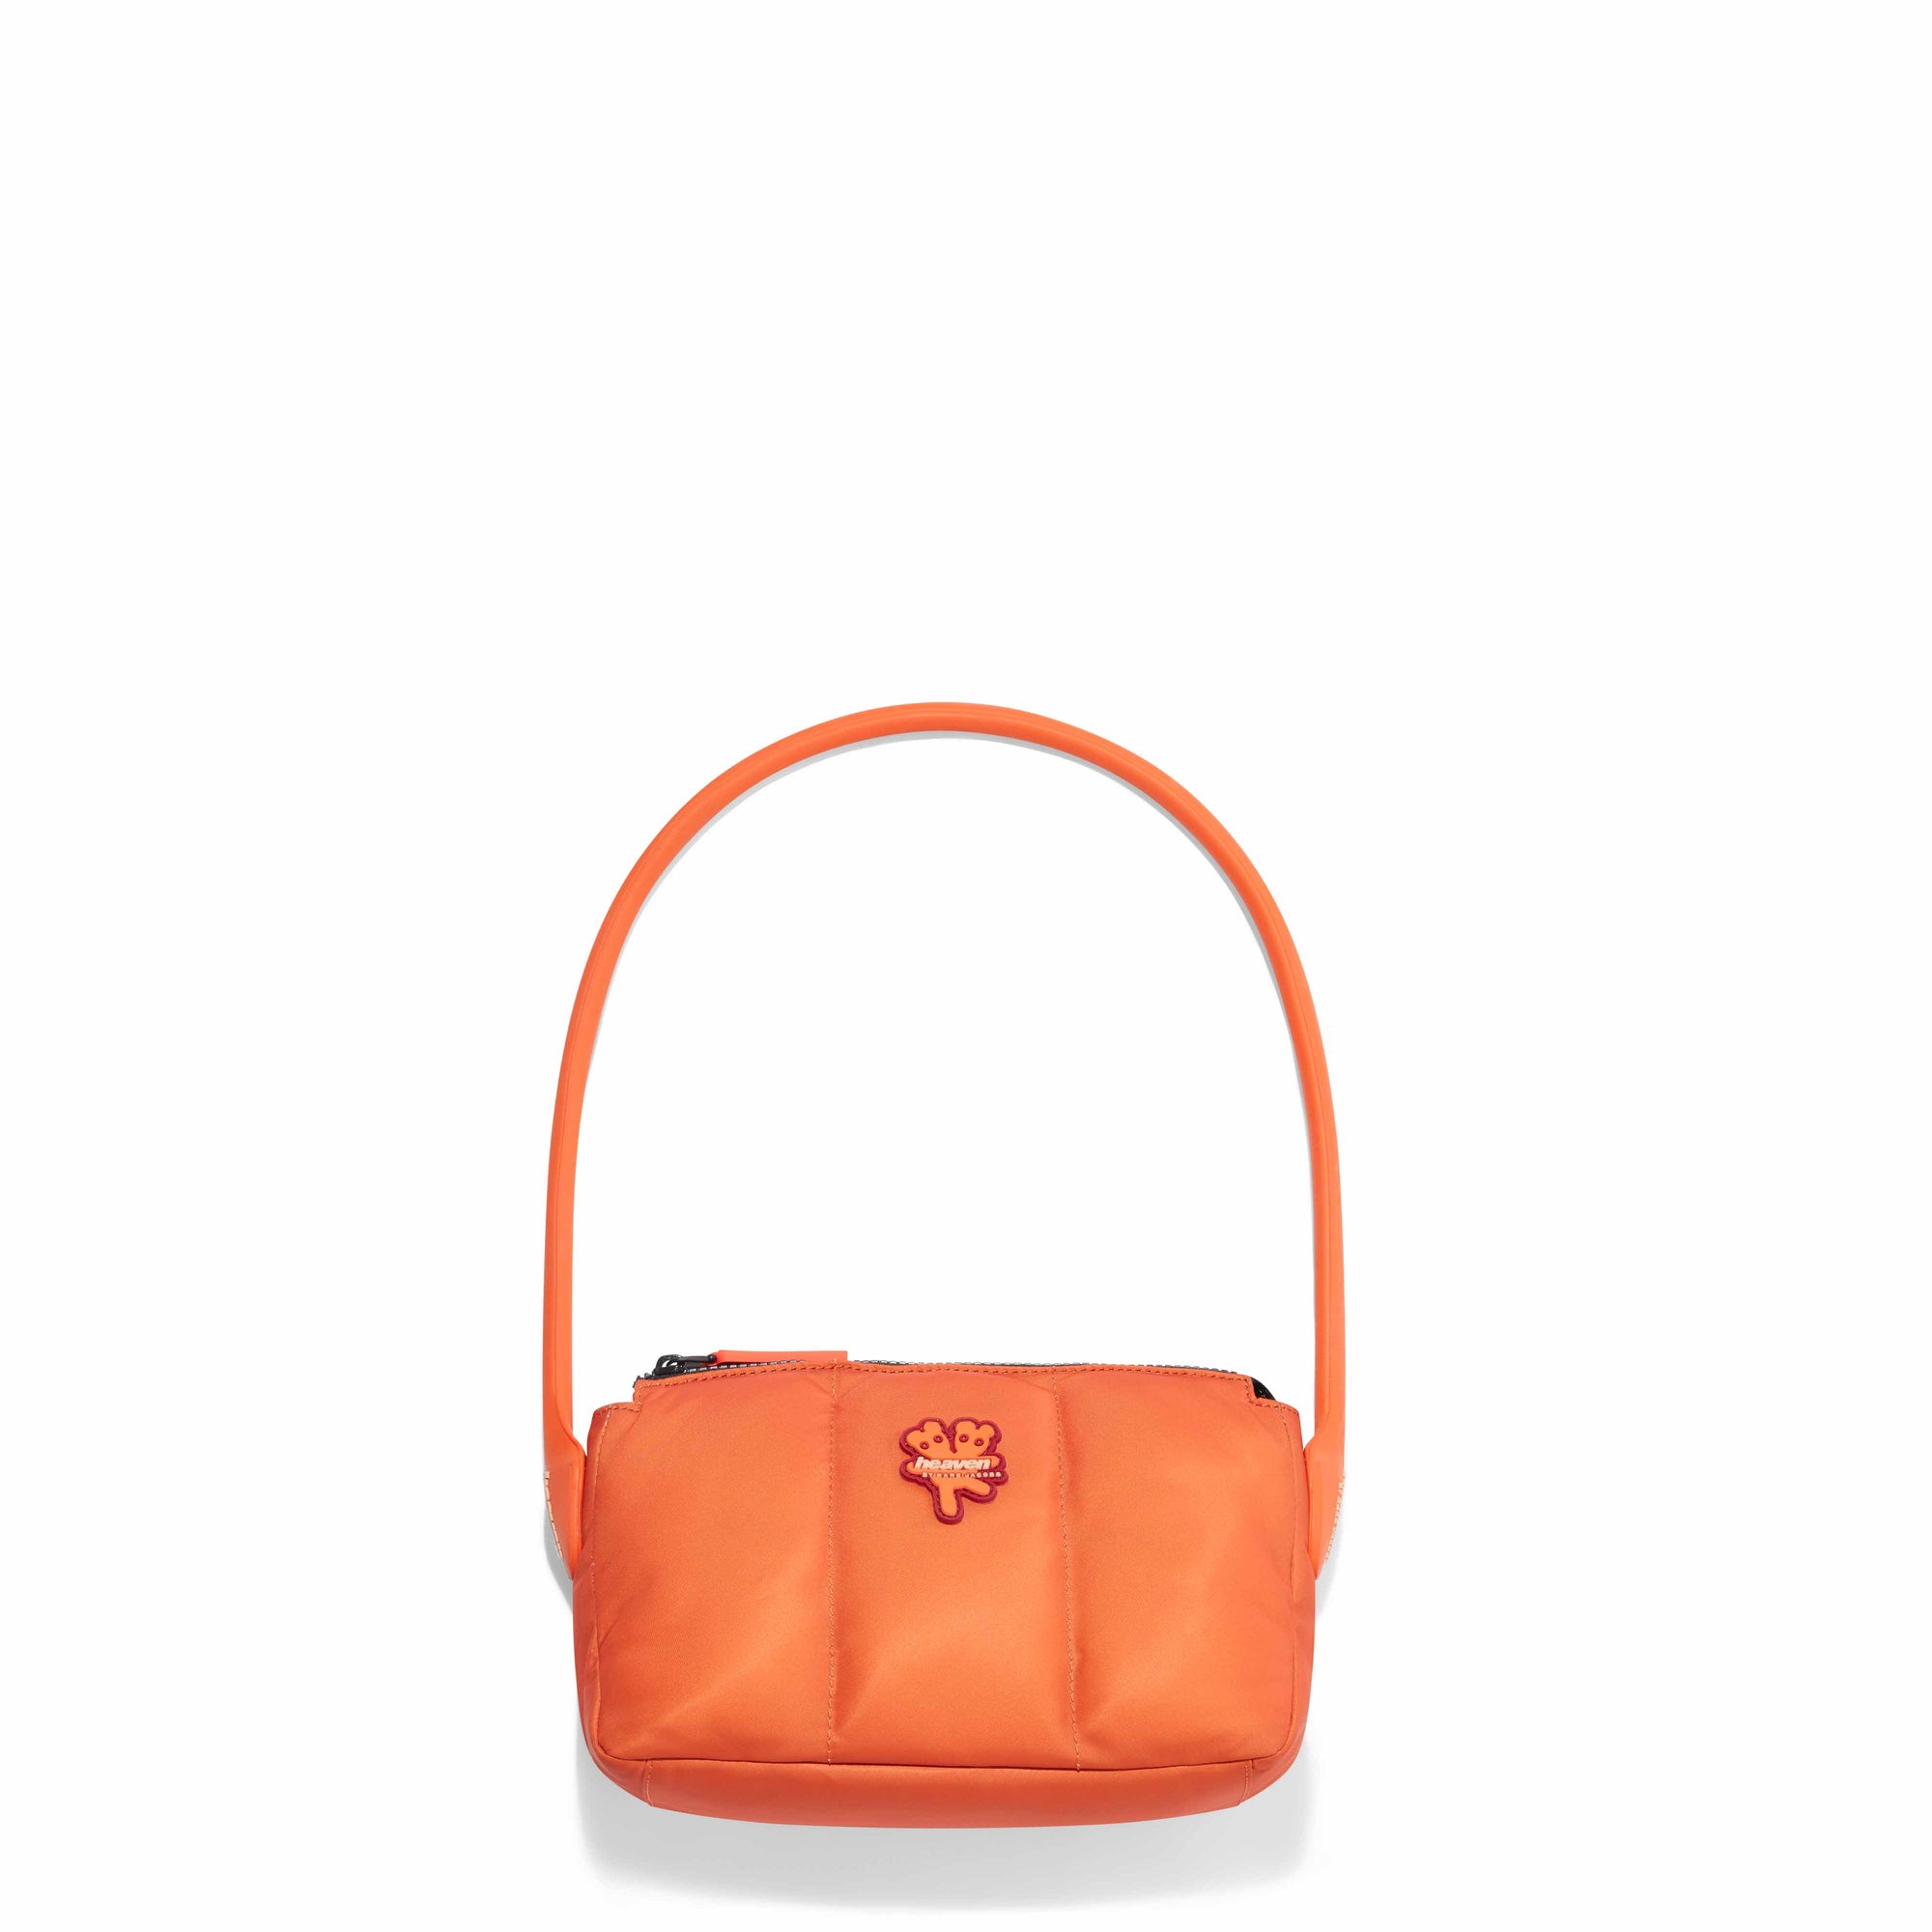 Heaven by Marc Jacobs - Women’s Shoulder Bag - (Burnt Orange) view 1